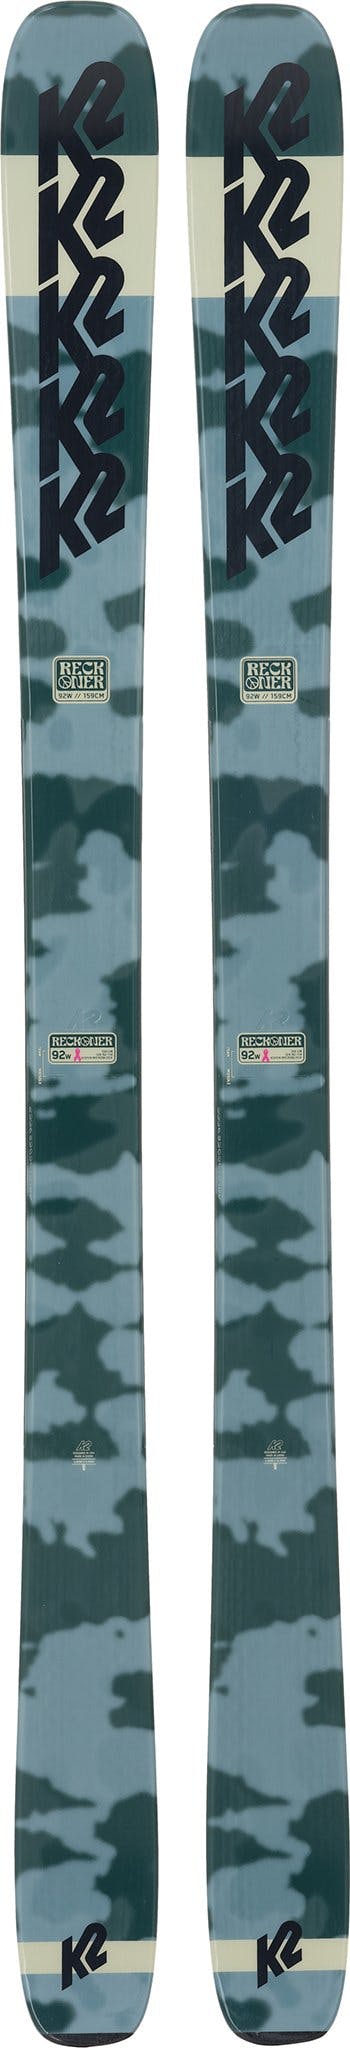 Product image for Reckoner 92 Skis - Women’s